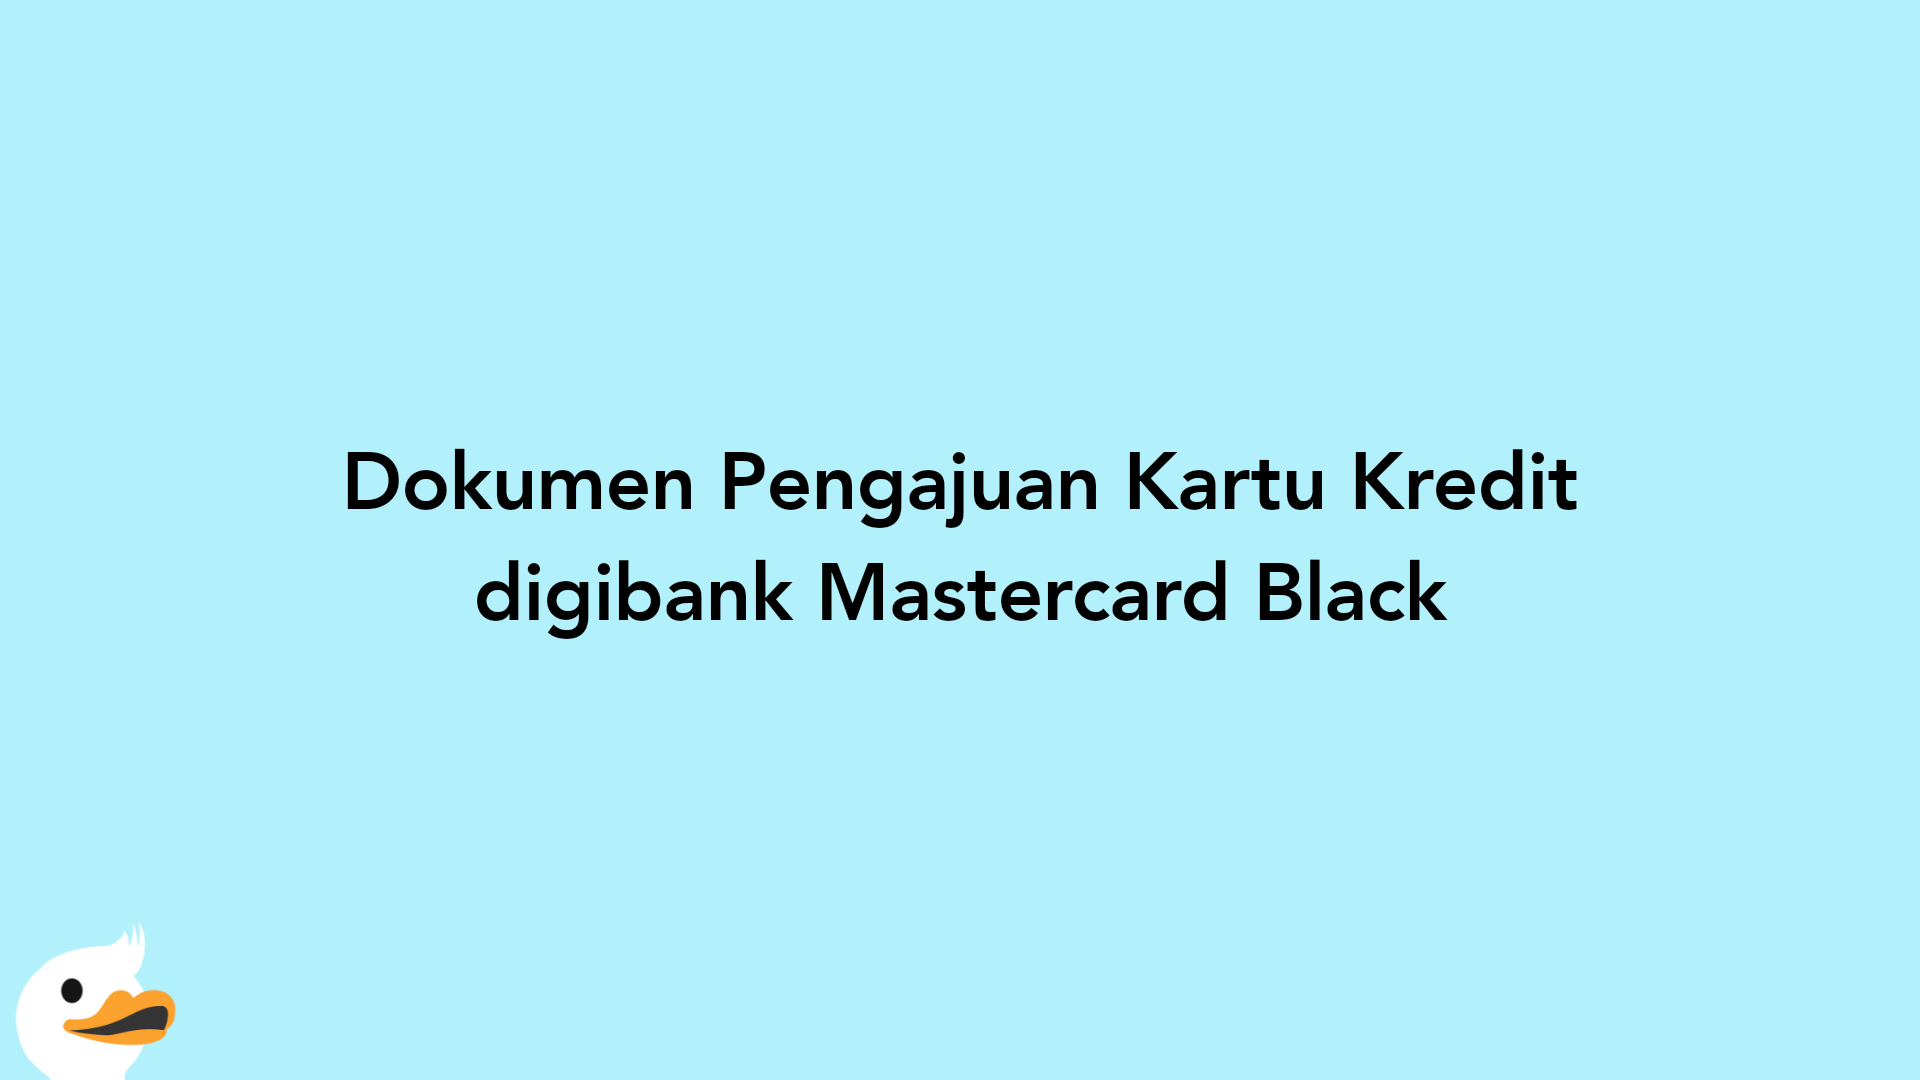 Dokumen Pengajuan Kartu Kredit digibank Mastercard Black